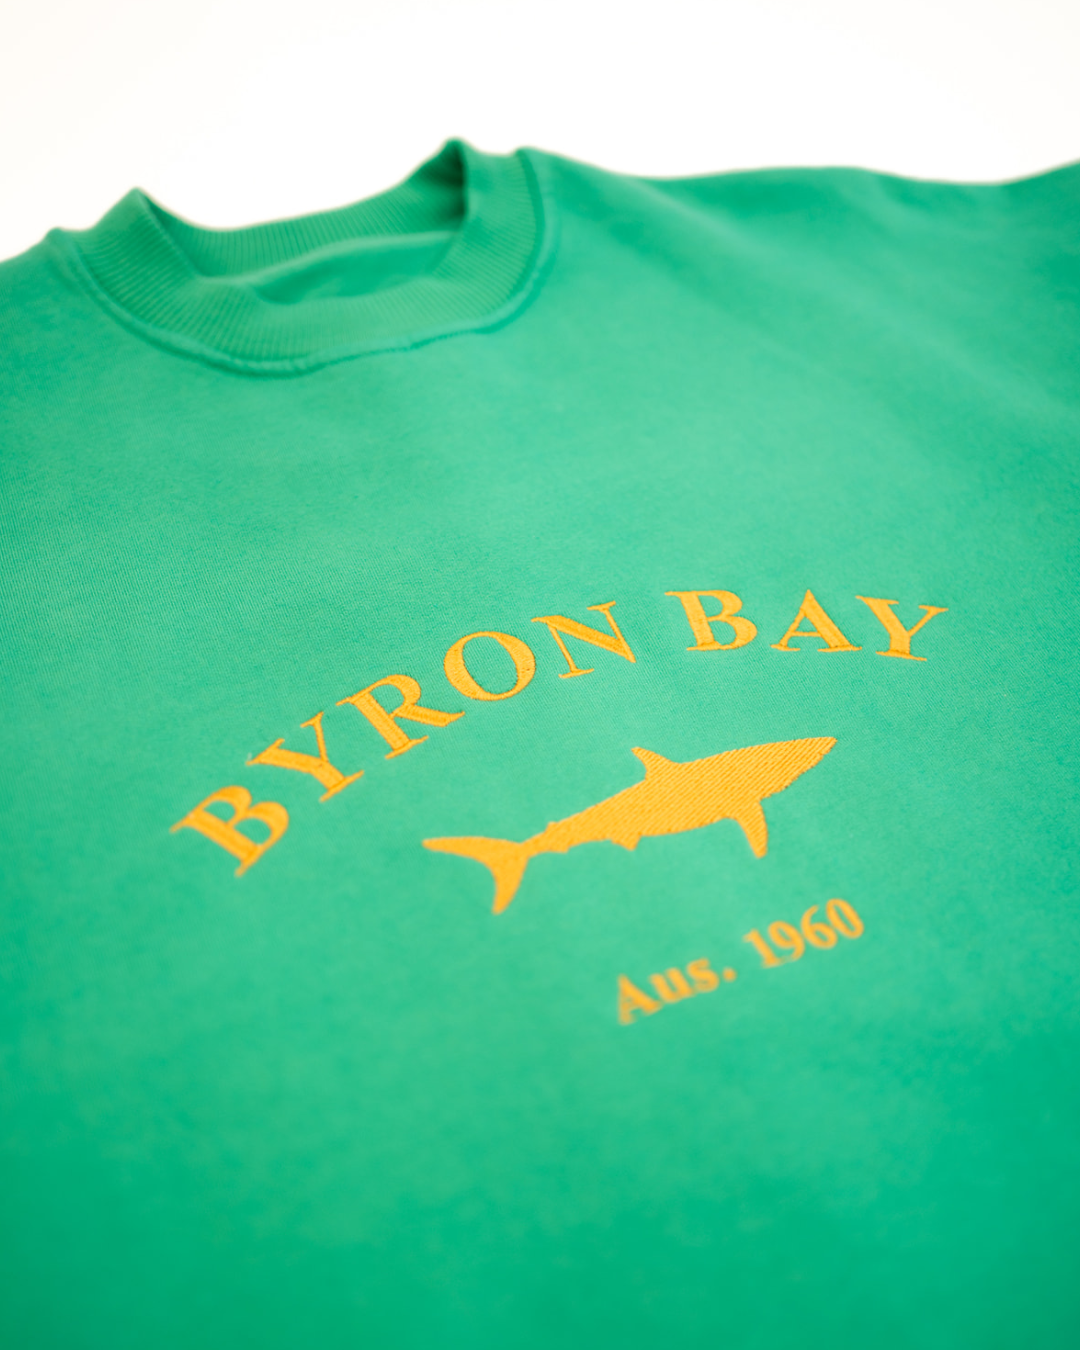 BYRON BAY Green - Oversized Washed Sweatshirt